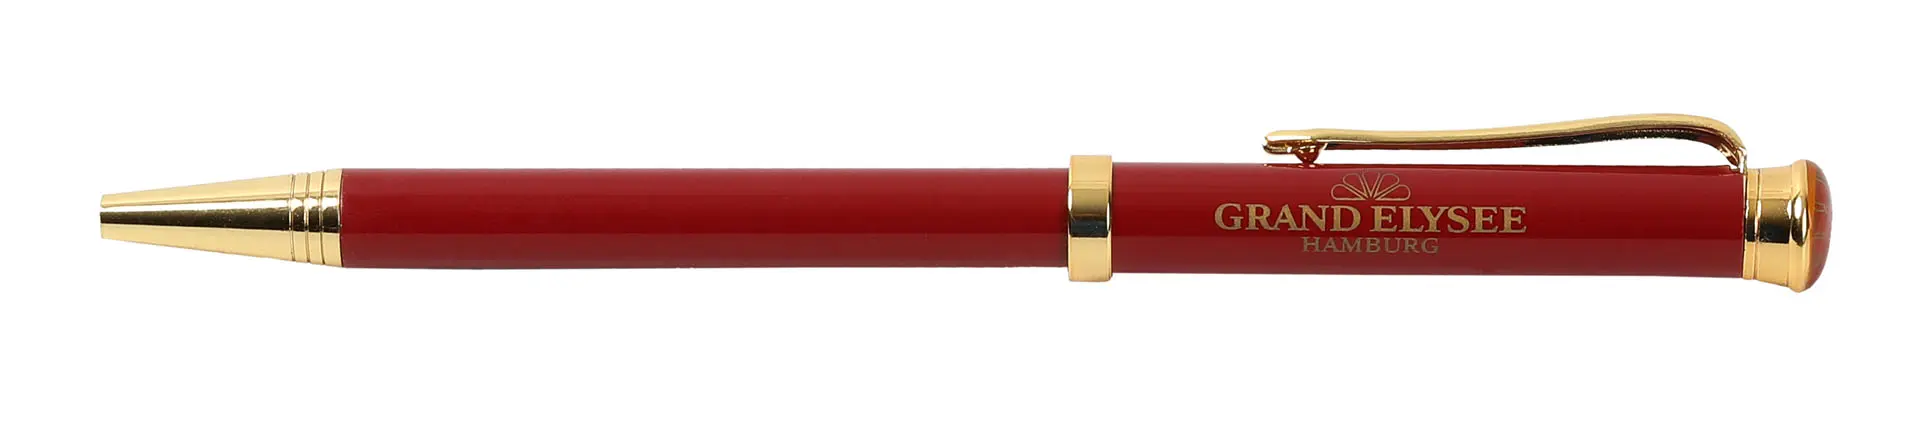 kugelschreiber-logo kugelschreiber-individuelle produkte